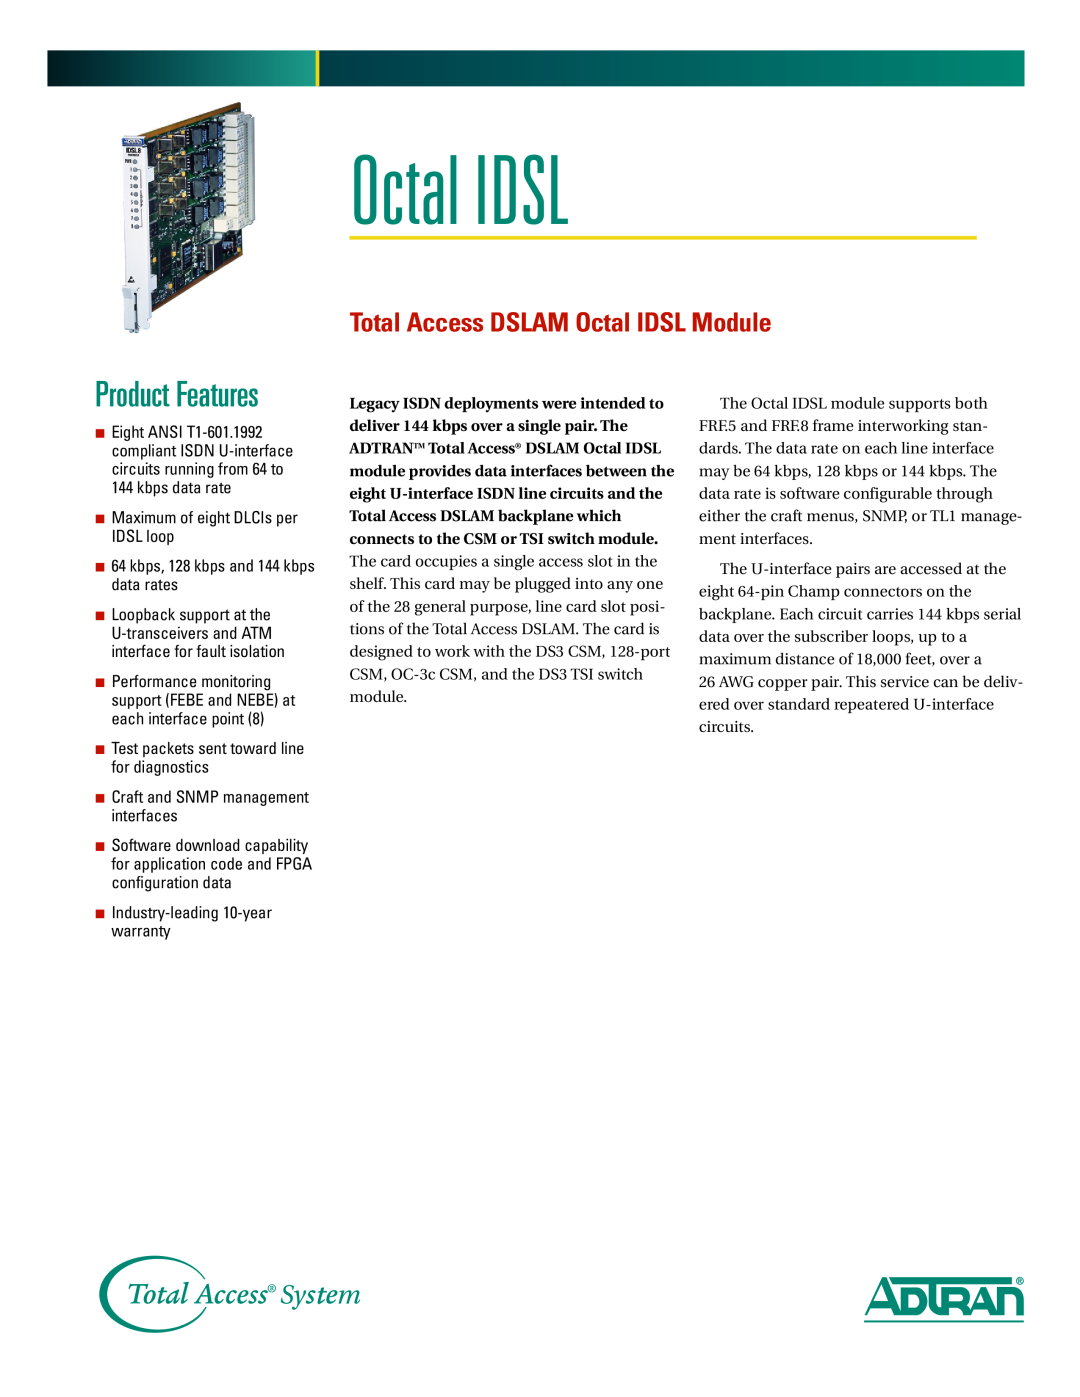 ADTRAN warranty Total Access DSLAM Octal IDSL Module, Product Features, Maximum of eight DLCIs per IDSL loop 